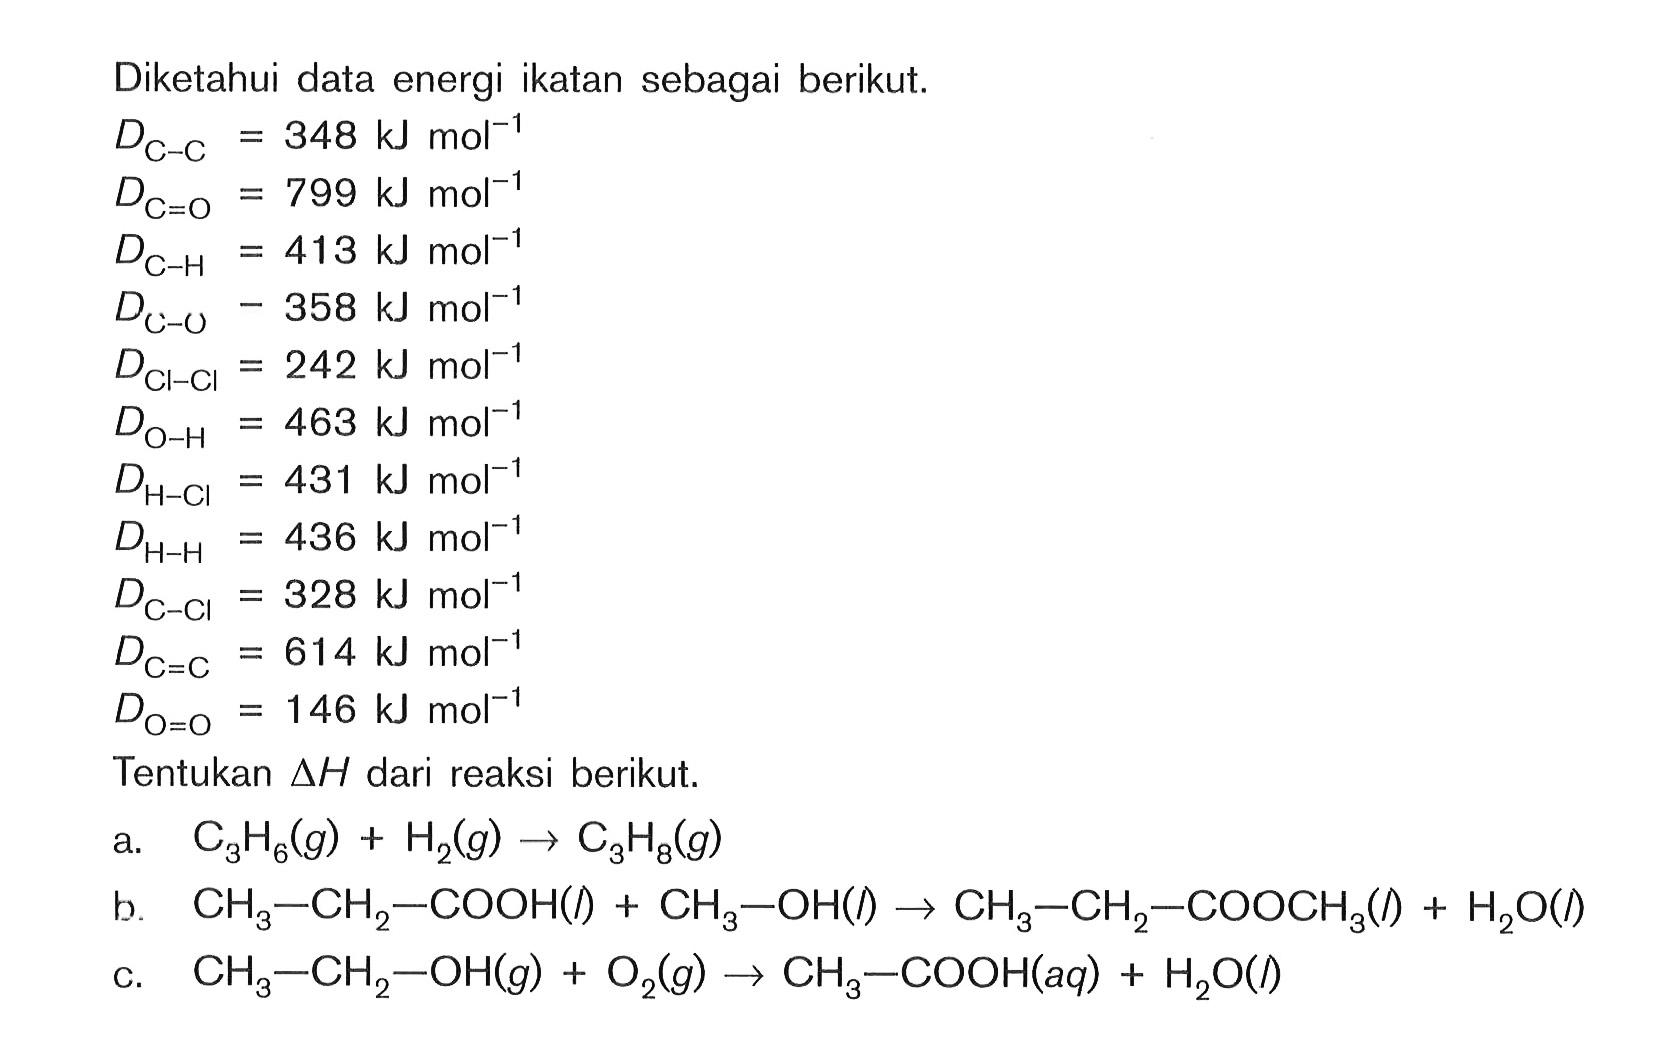 Diketahui data energi ikatan sebagai berikut. DC=C = 348 kJmol^-1 DC-O = 799 kJmol^-1 DC-H = 413 kJmol^-1 DC=O = 358 kJmol^-1 DCl-Cl = 242 kJmol^-1 DO-H = 463 kJmol^-1 DH-Cl = 431 kJmol^-1 DH-H = 436 kJmol^-1 DC-Cl = 328 kJmol^-1 DC=C = 614 kJmol^-1 DO=O = 146 kJmol^-1 Tentukan deltaH dari reaksi berikut. a. C3H6(g) + H2(g) -> C3H8(g) b. CH3-CH3-COOH(l) + CH3 - OH(l) -> CH3 - CH2 - COOCH3(l) + H2O(l) c. CH3-CH2-OH(g) +O2(g) -> CH3 - COOH(aq) + H2O(l)